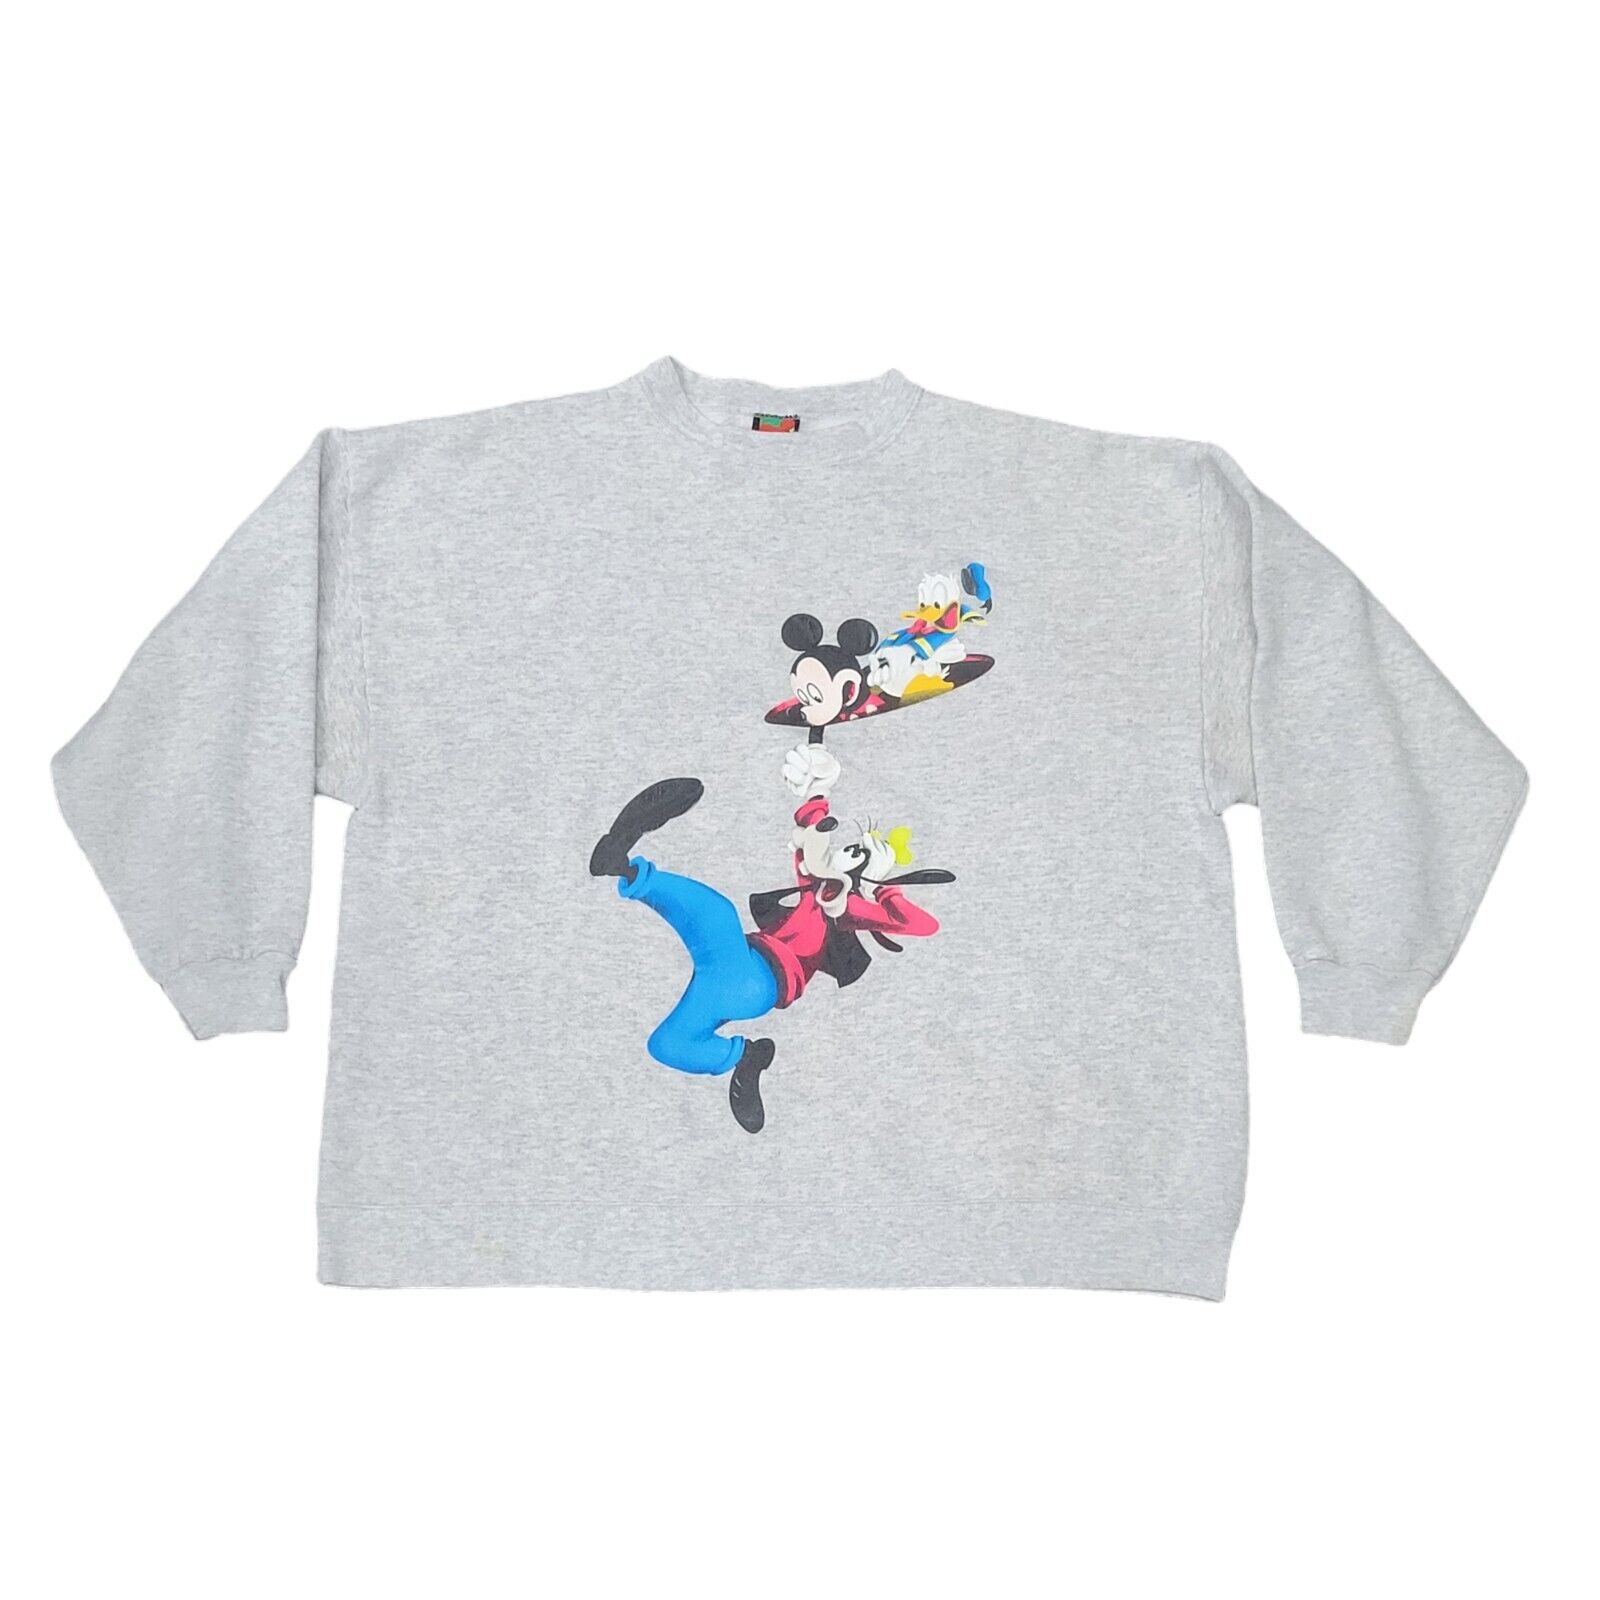 Vintage 90s Disney Mickey Mouse Unlimited Sweatshirt Goofy Size L/XL Gray